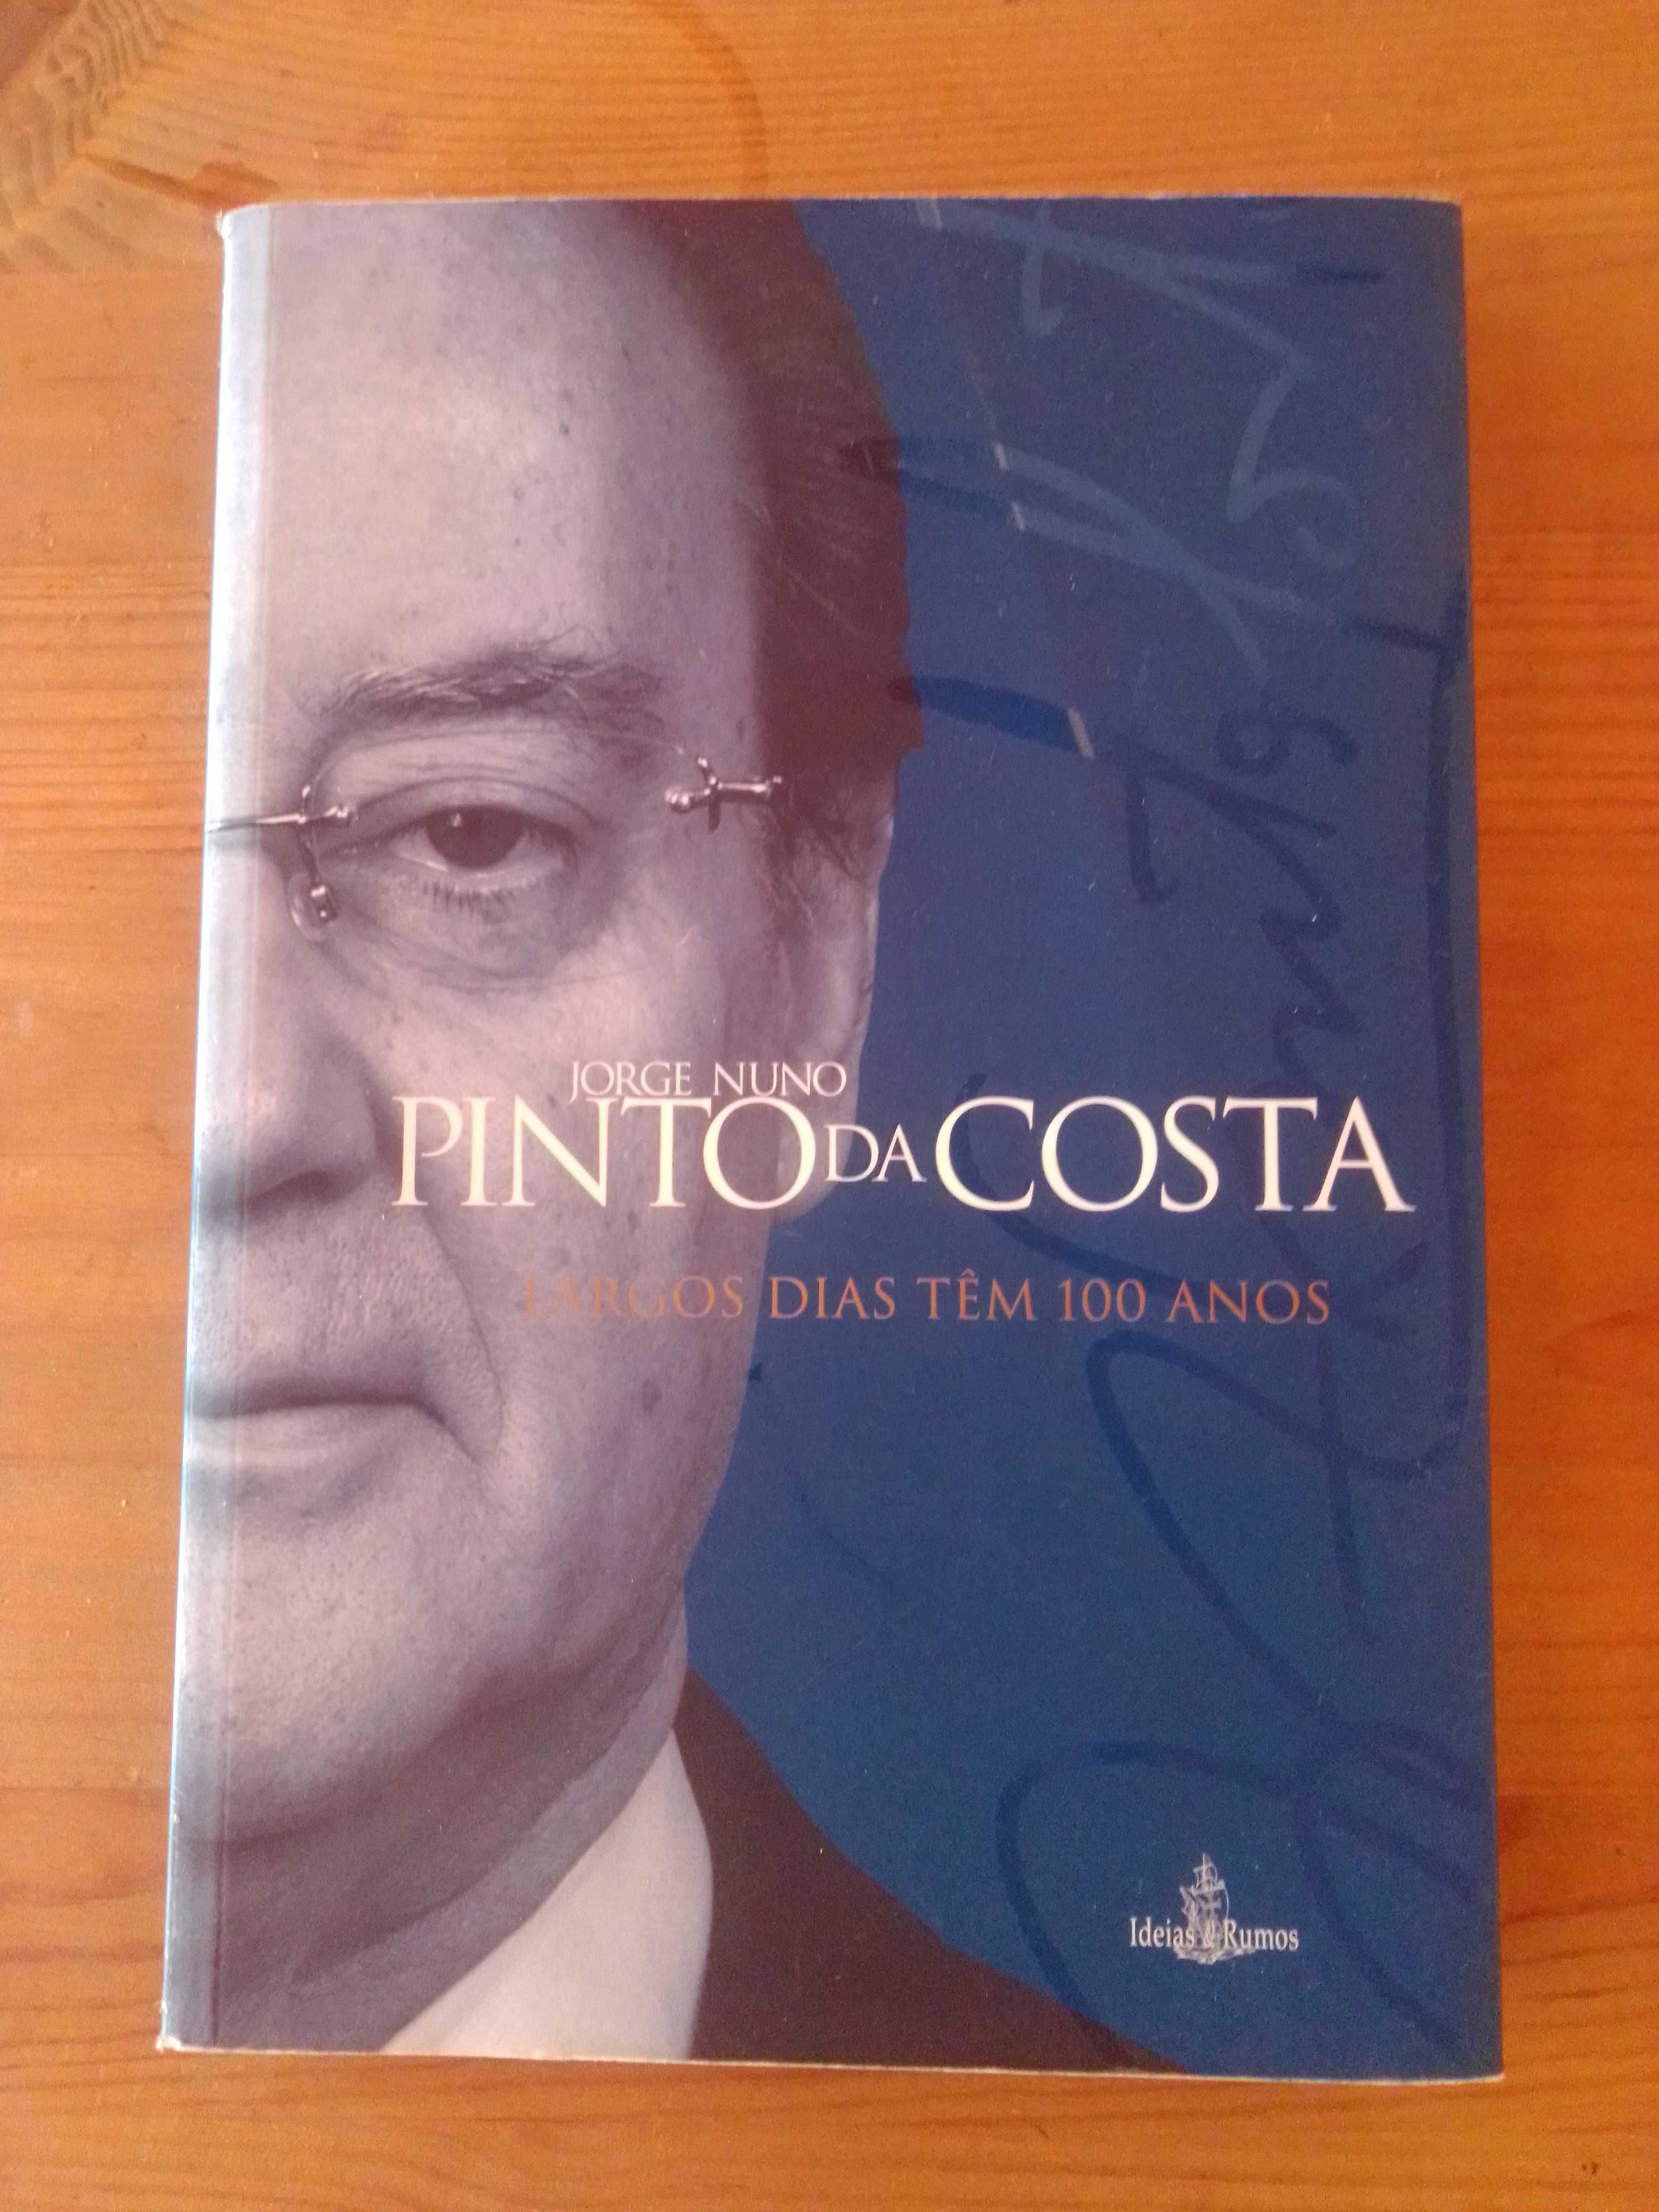 Pinto da Costa, autobiografia, 2004